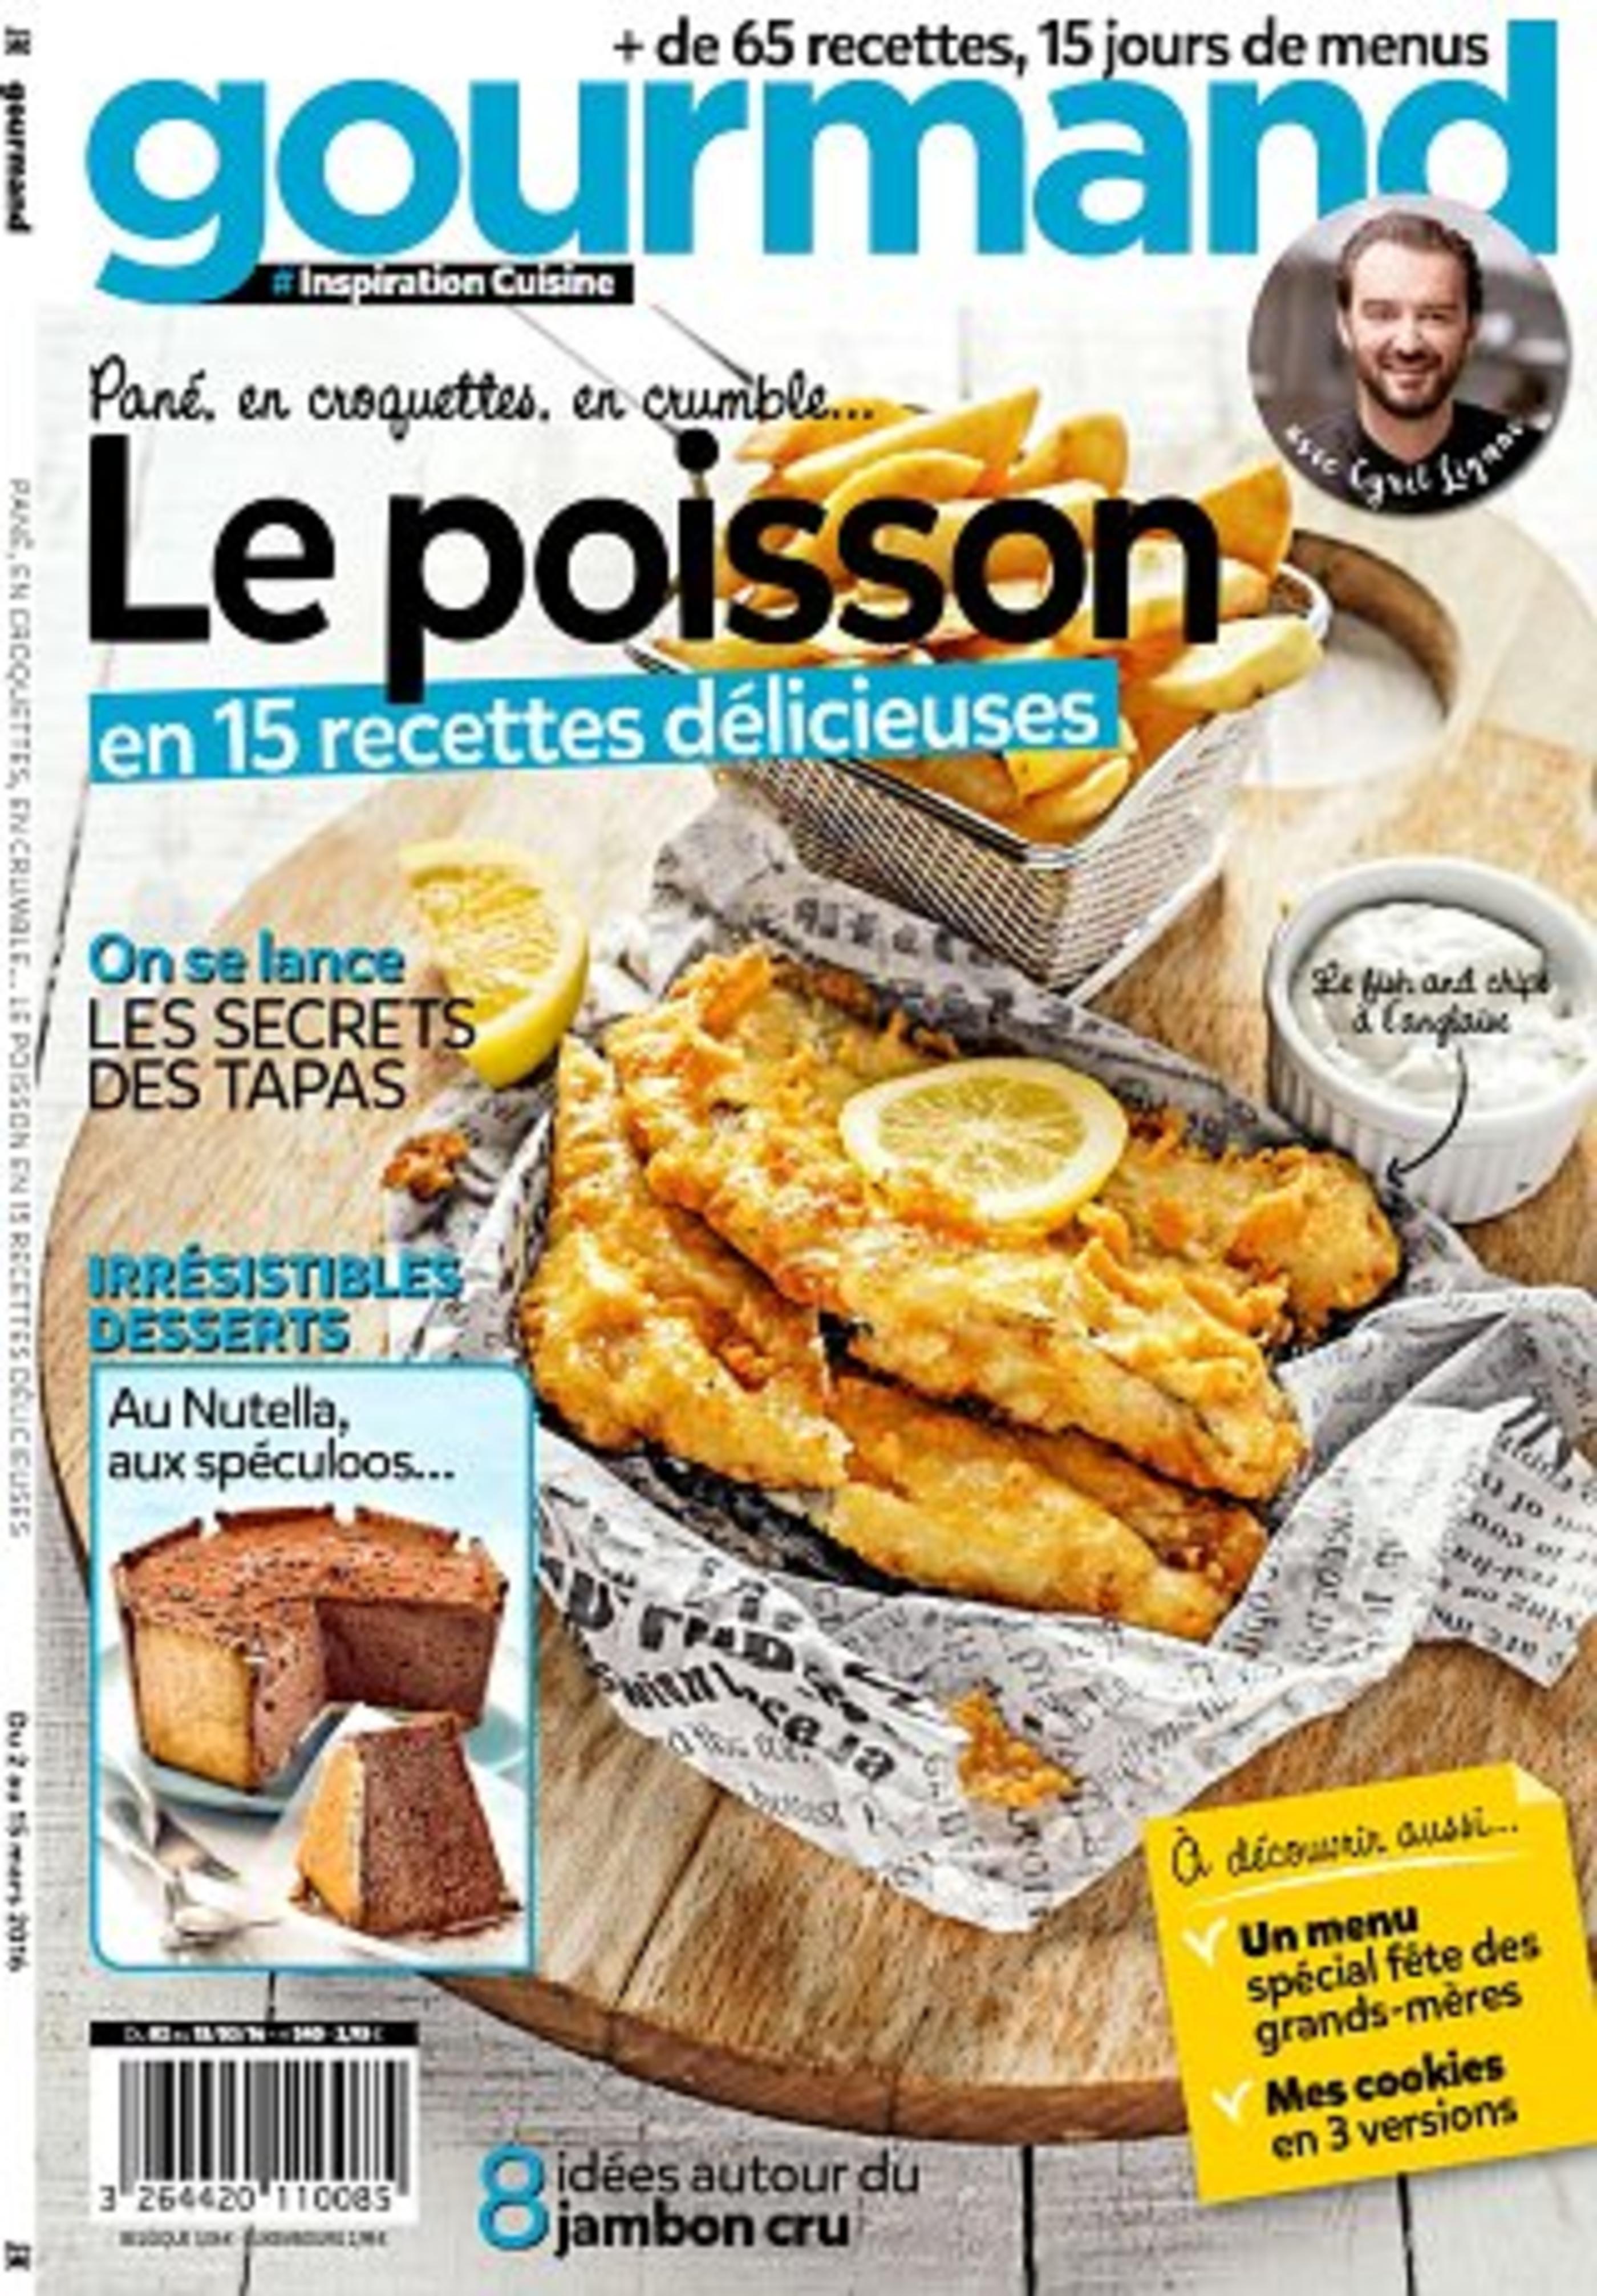 Couteau de cuisine Santoku Pradel Jean Dubost, Gourmand magazine Mars 2016